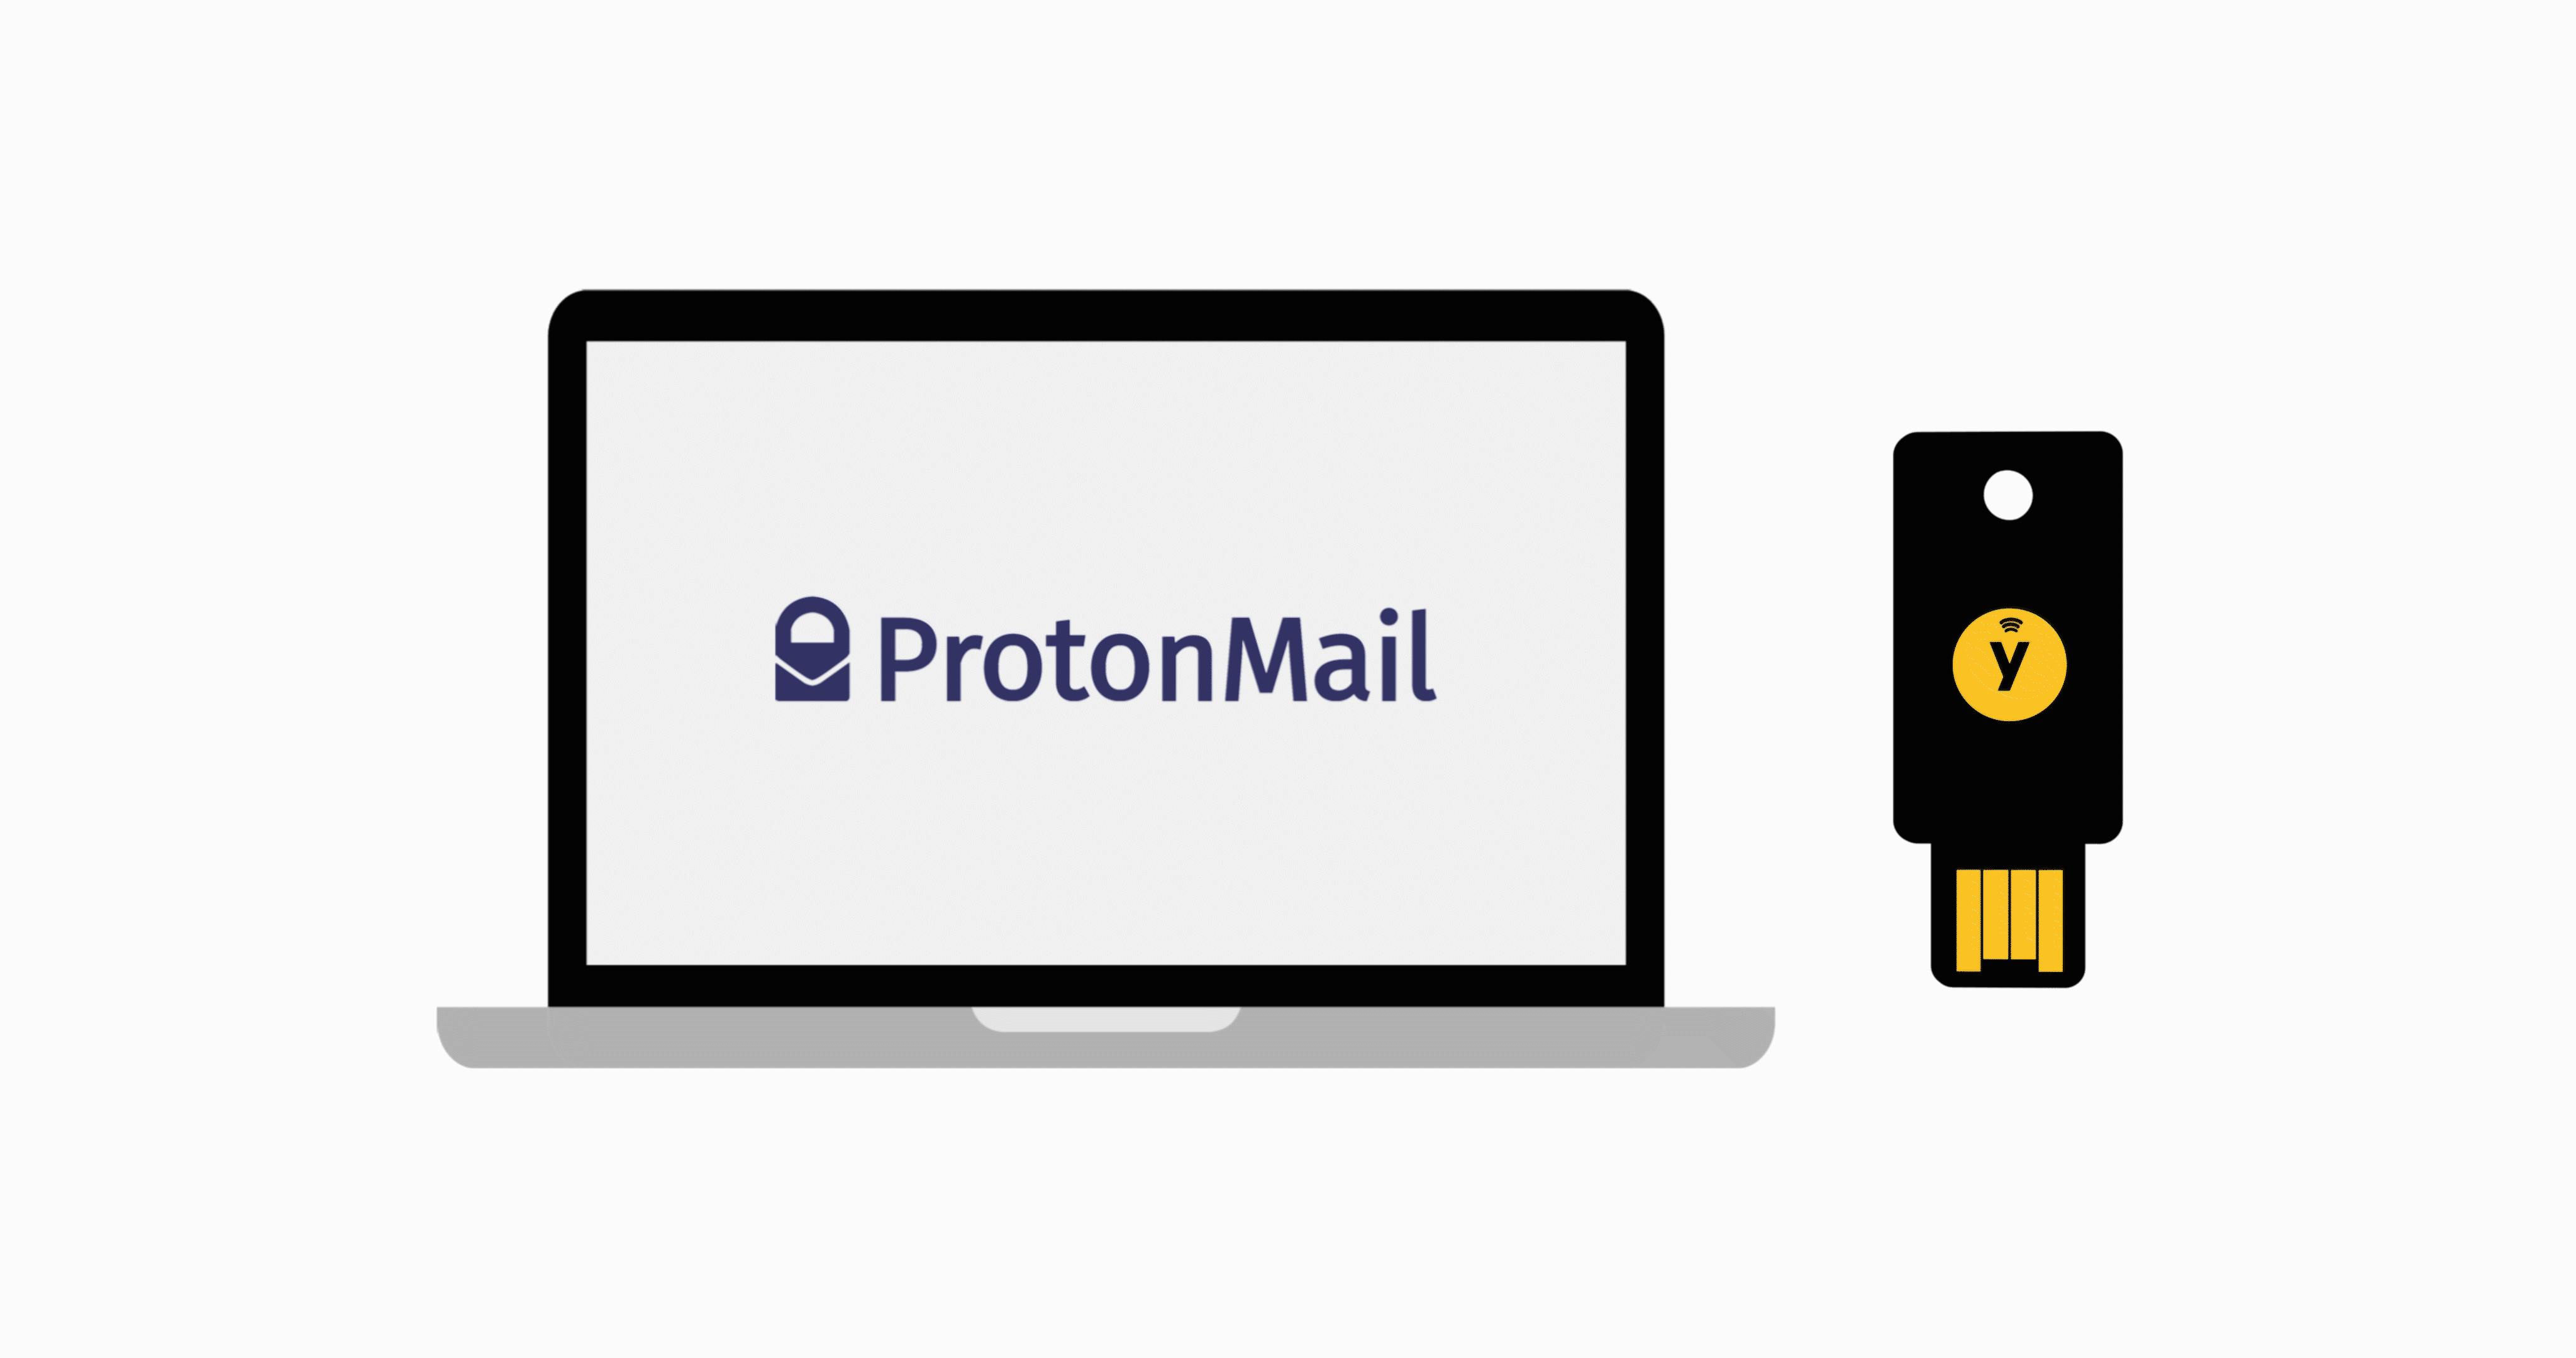 ProtonMail main image